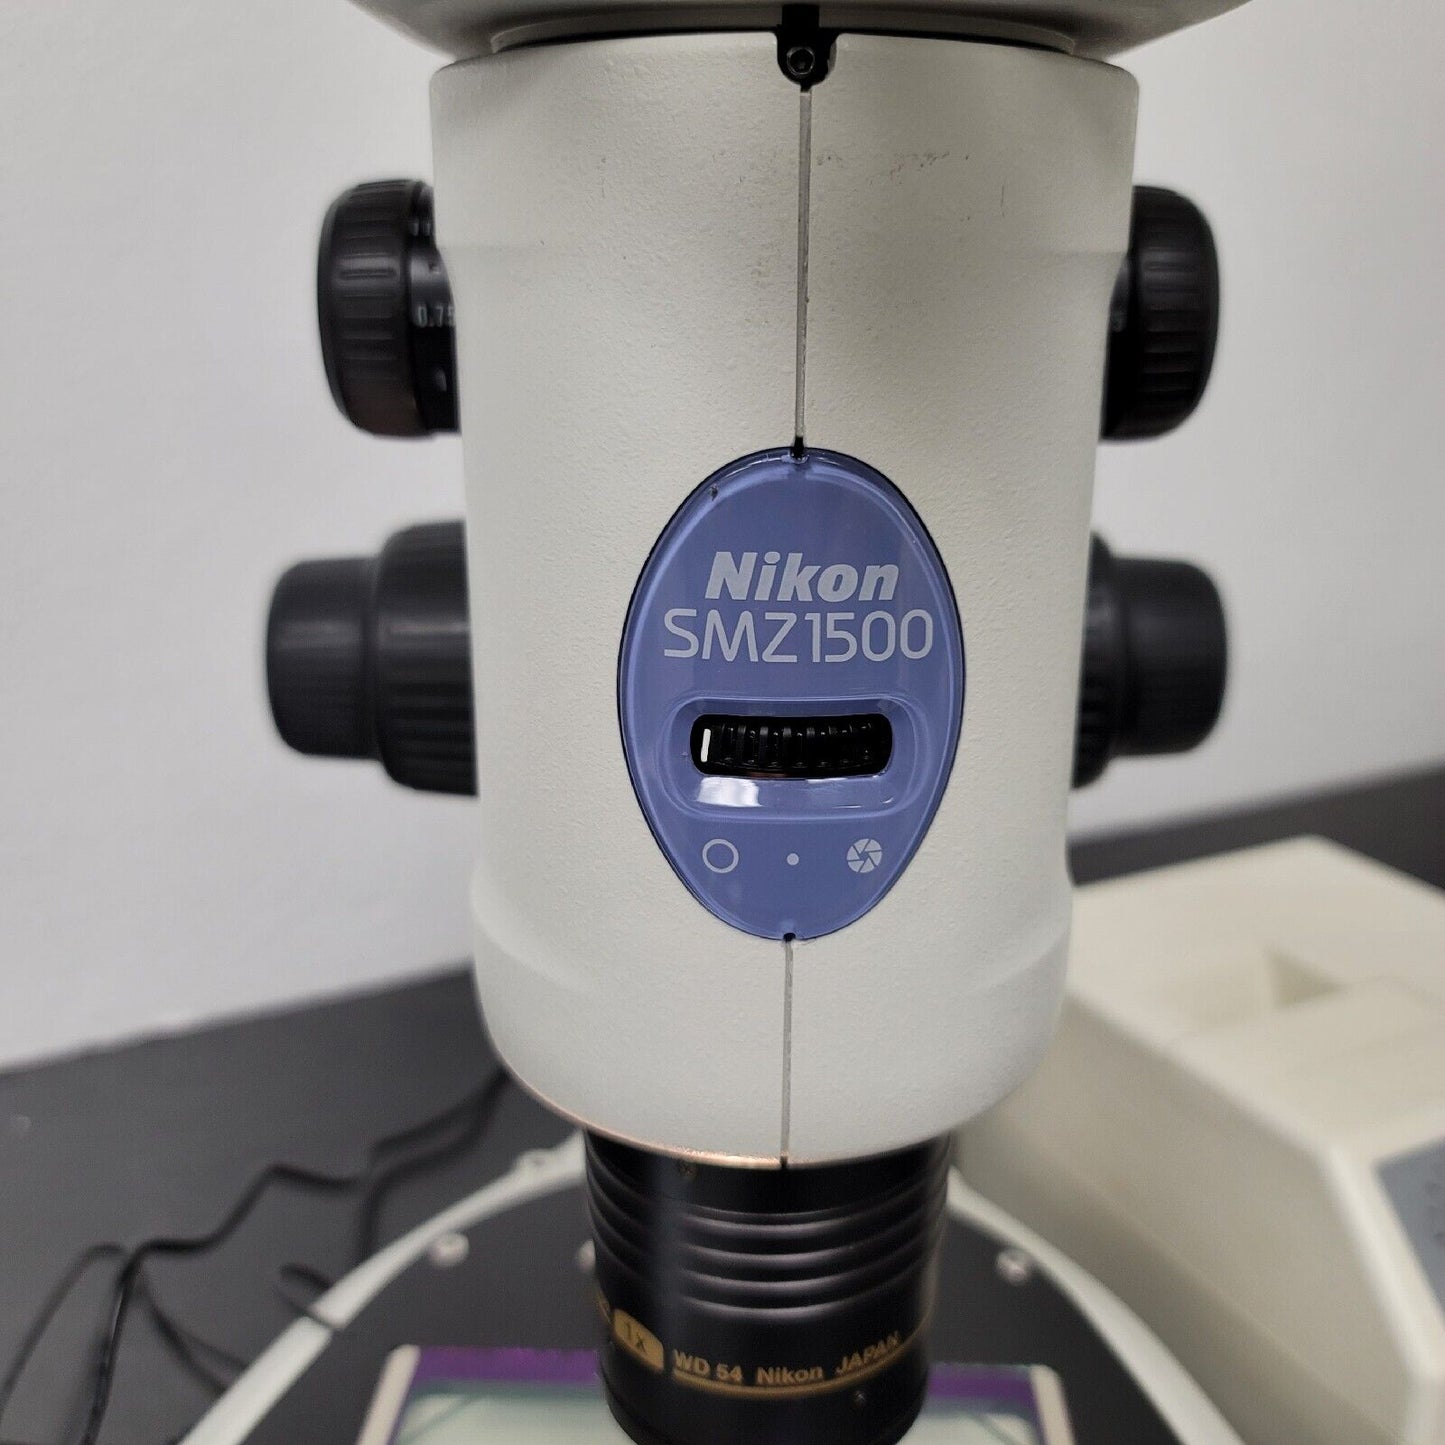 Nikon Microscope SMZ1500 with Okolab Heated Stage - microscopemarketplace